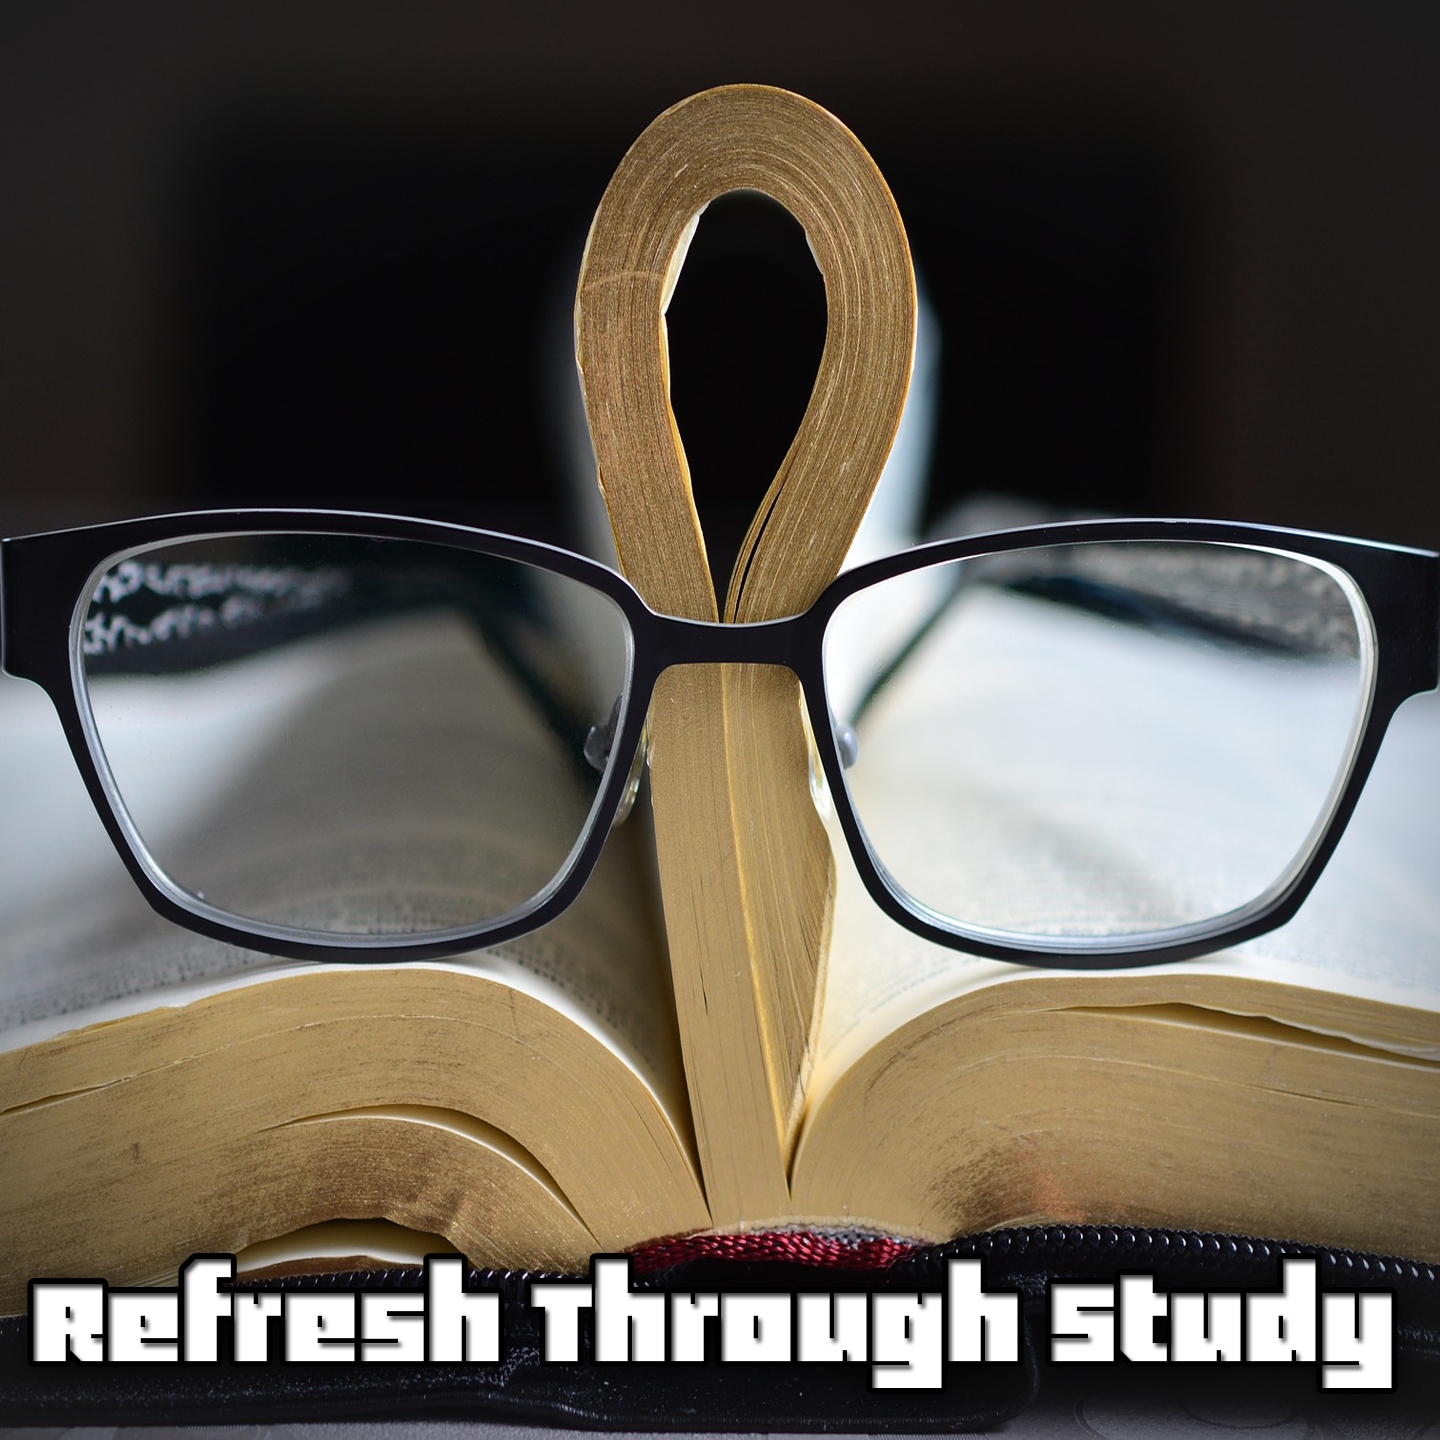 Refresh Through Study